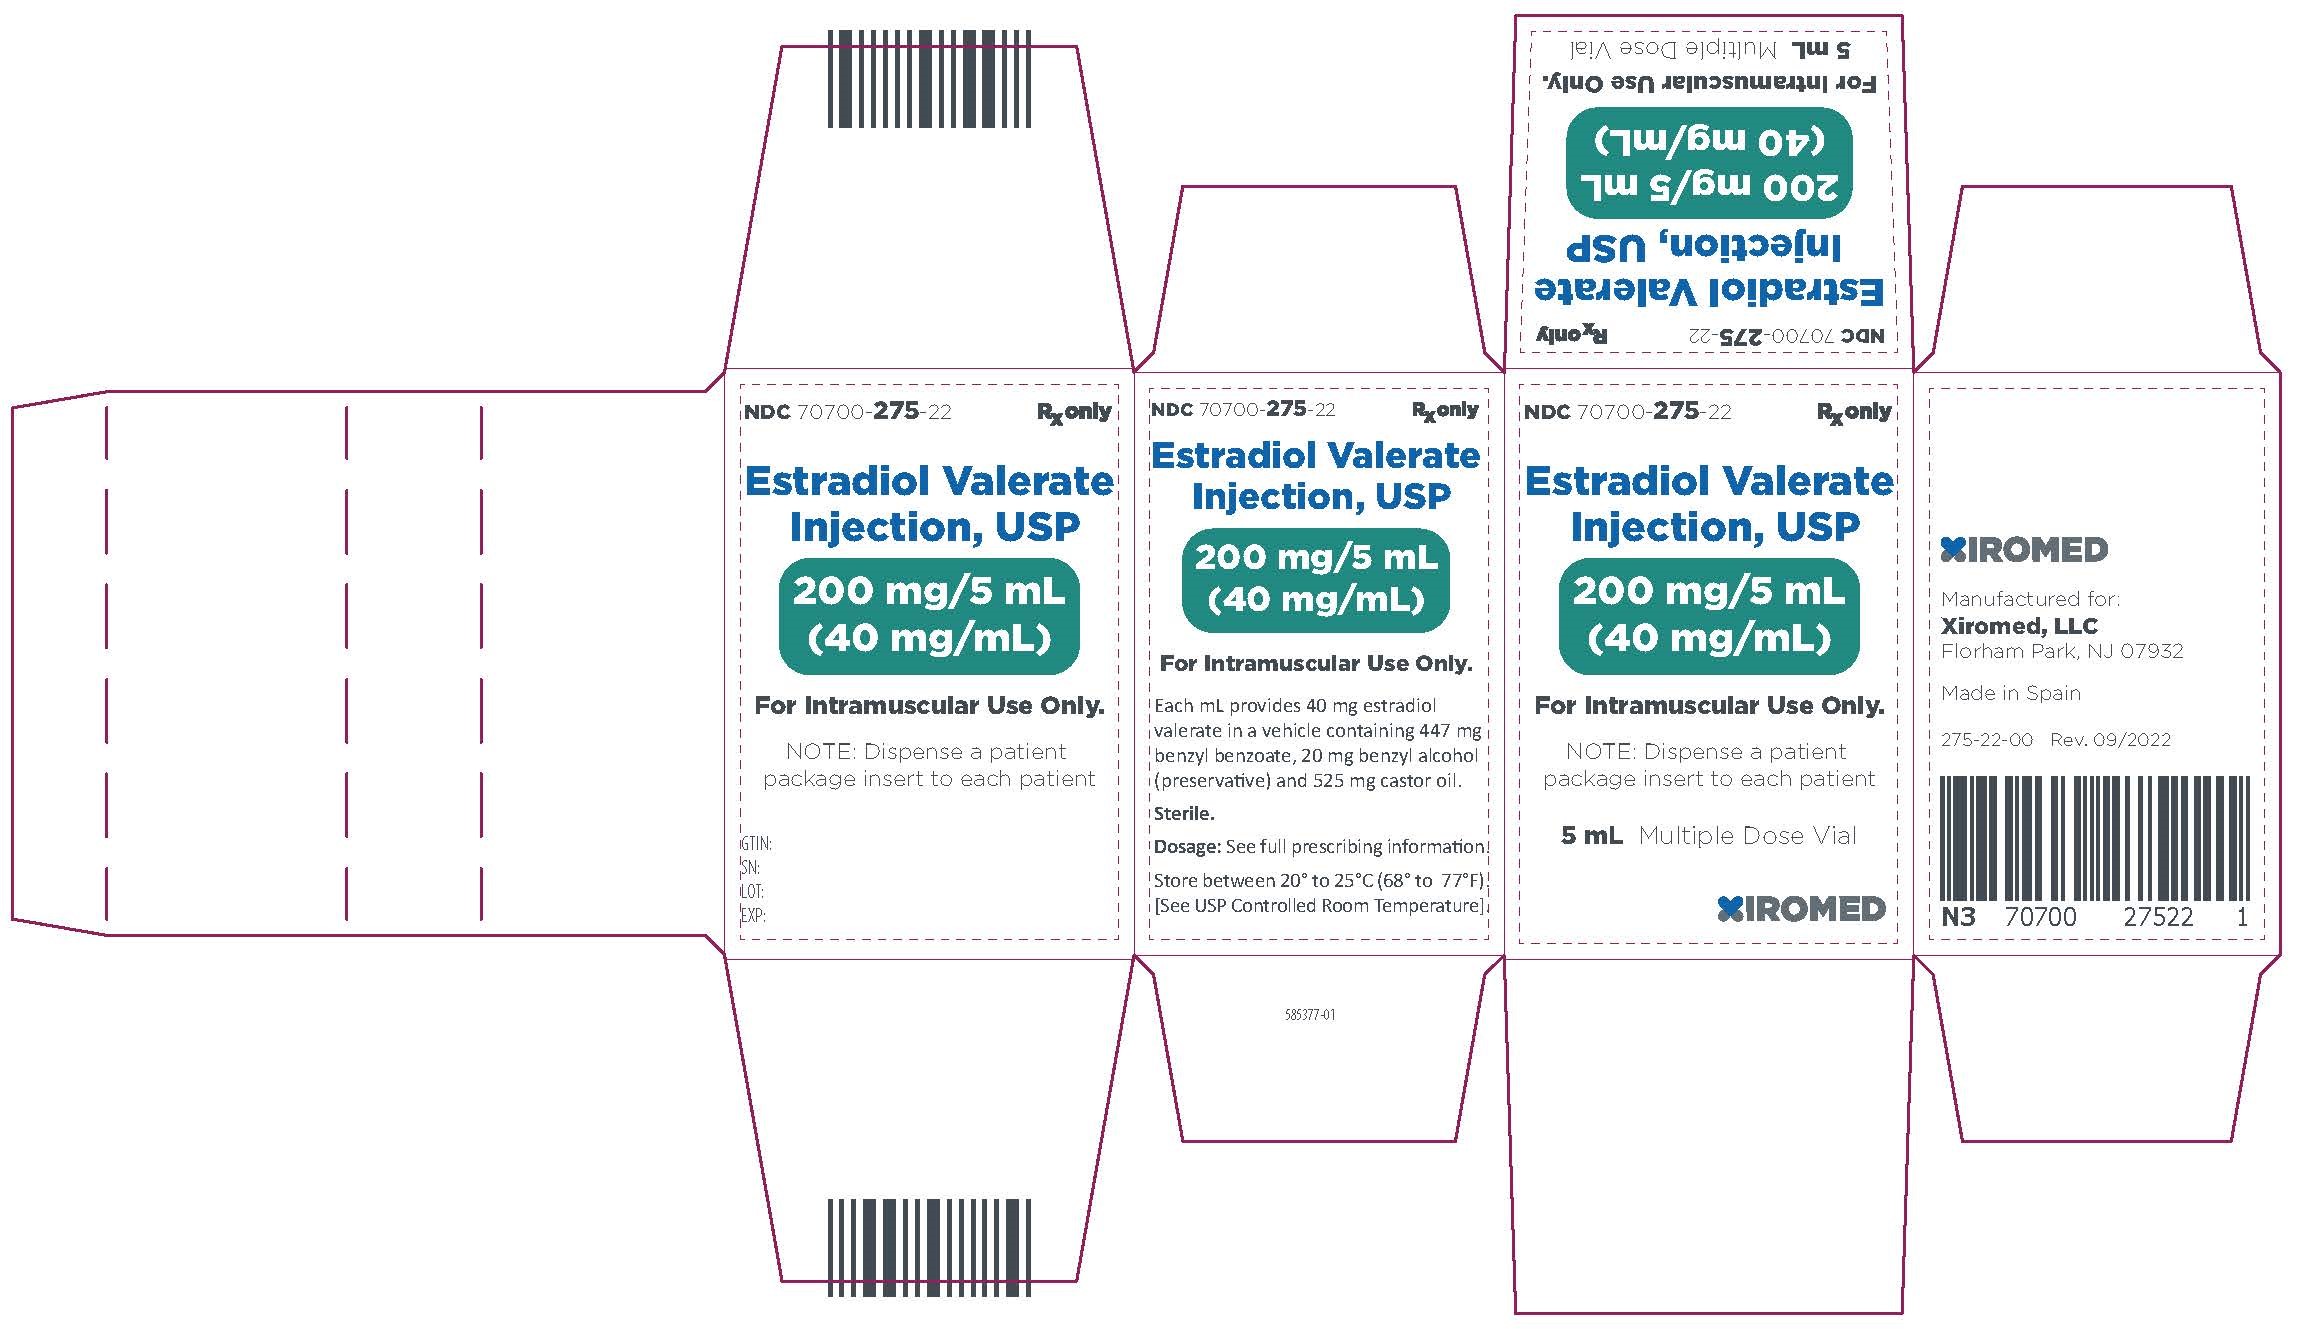 Estradiol valerate injection, USP 40 mg/mL - NDC 70700-275-22 - Carton Label